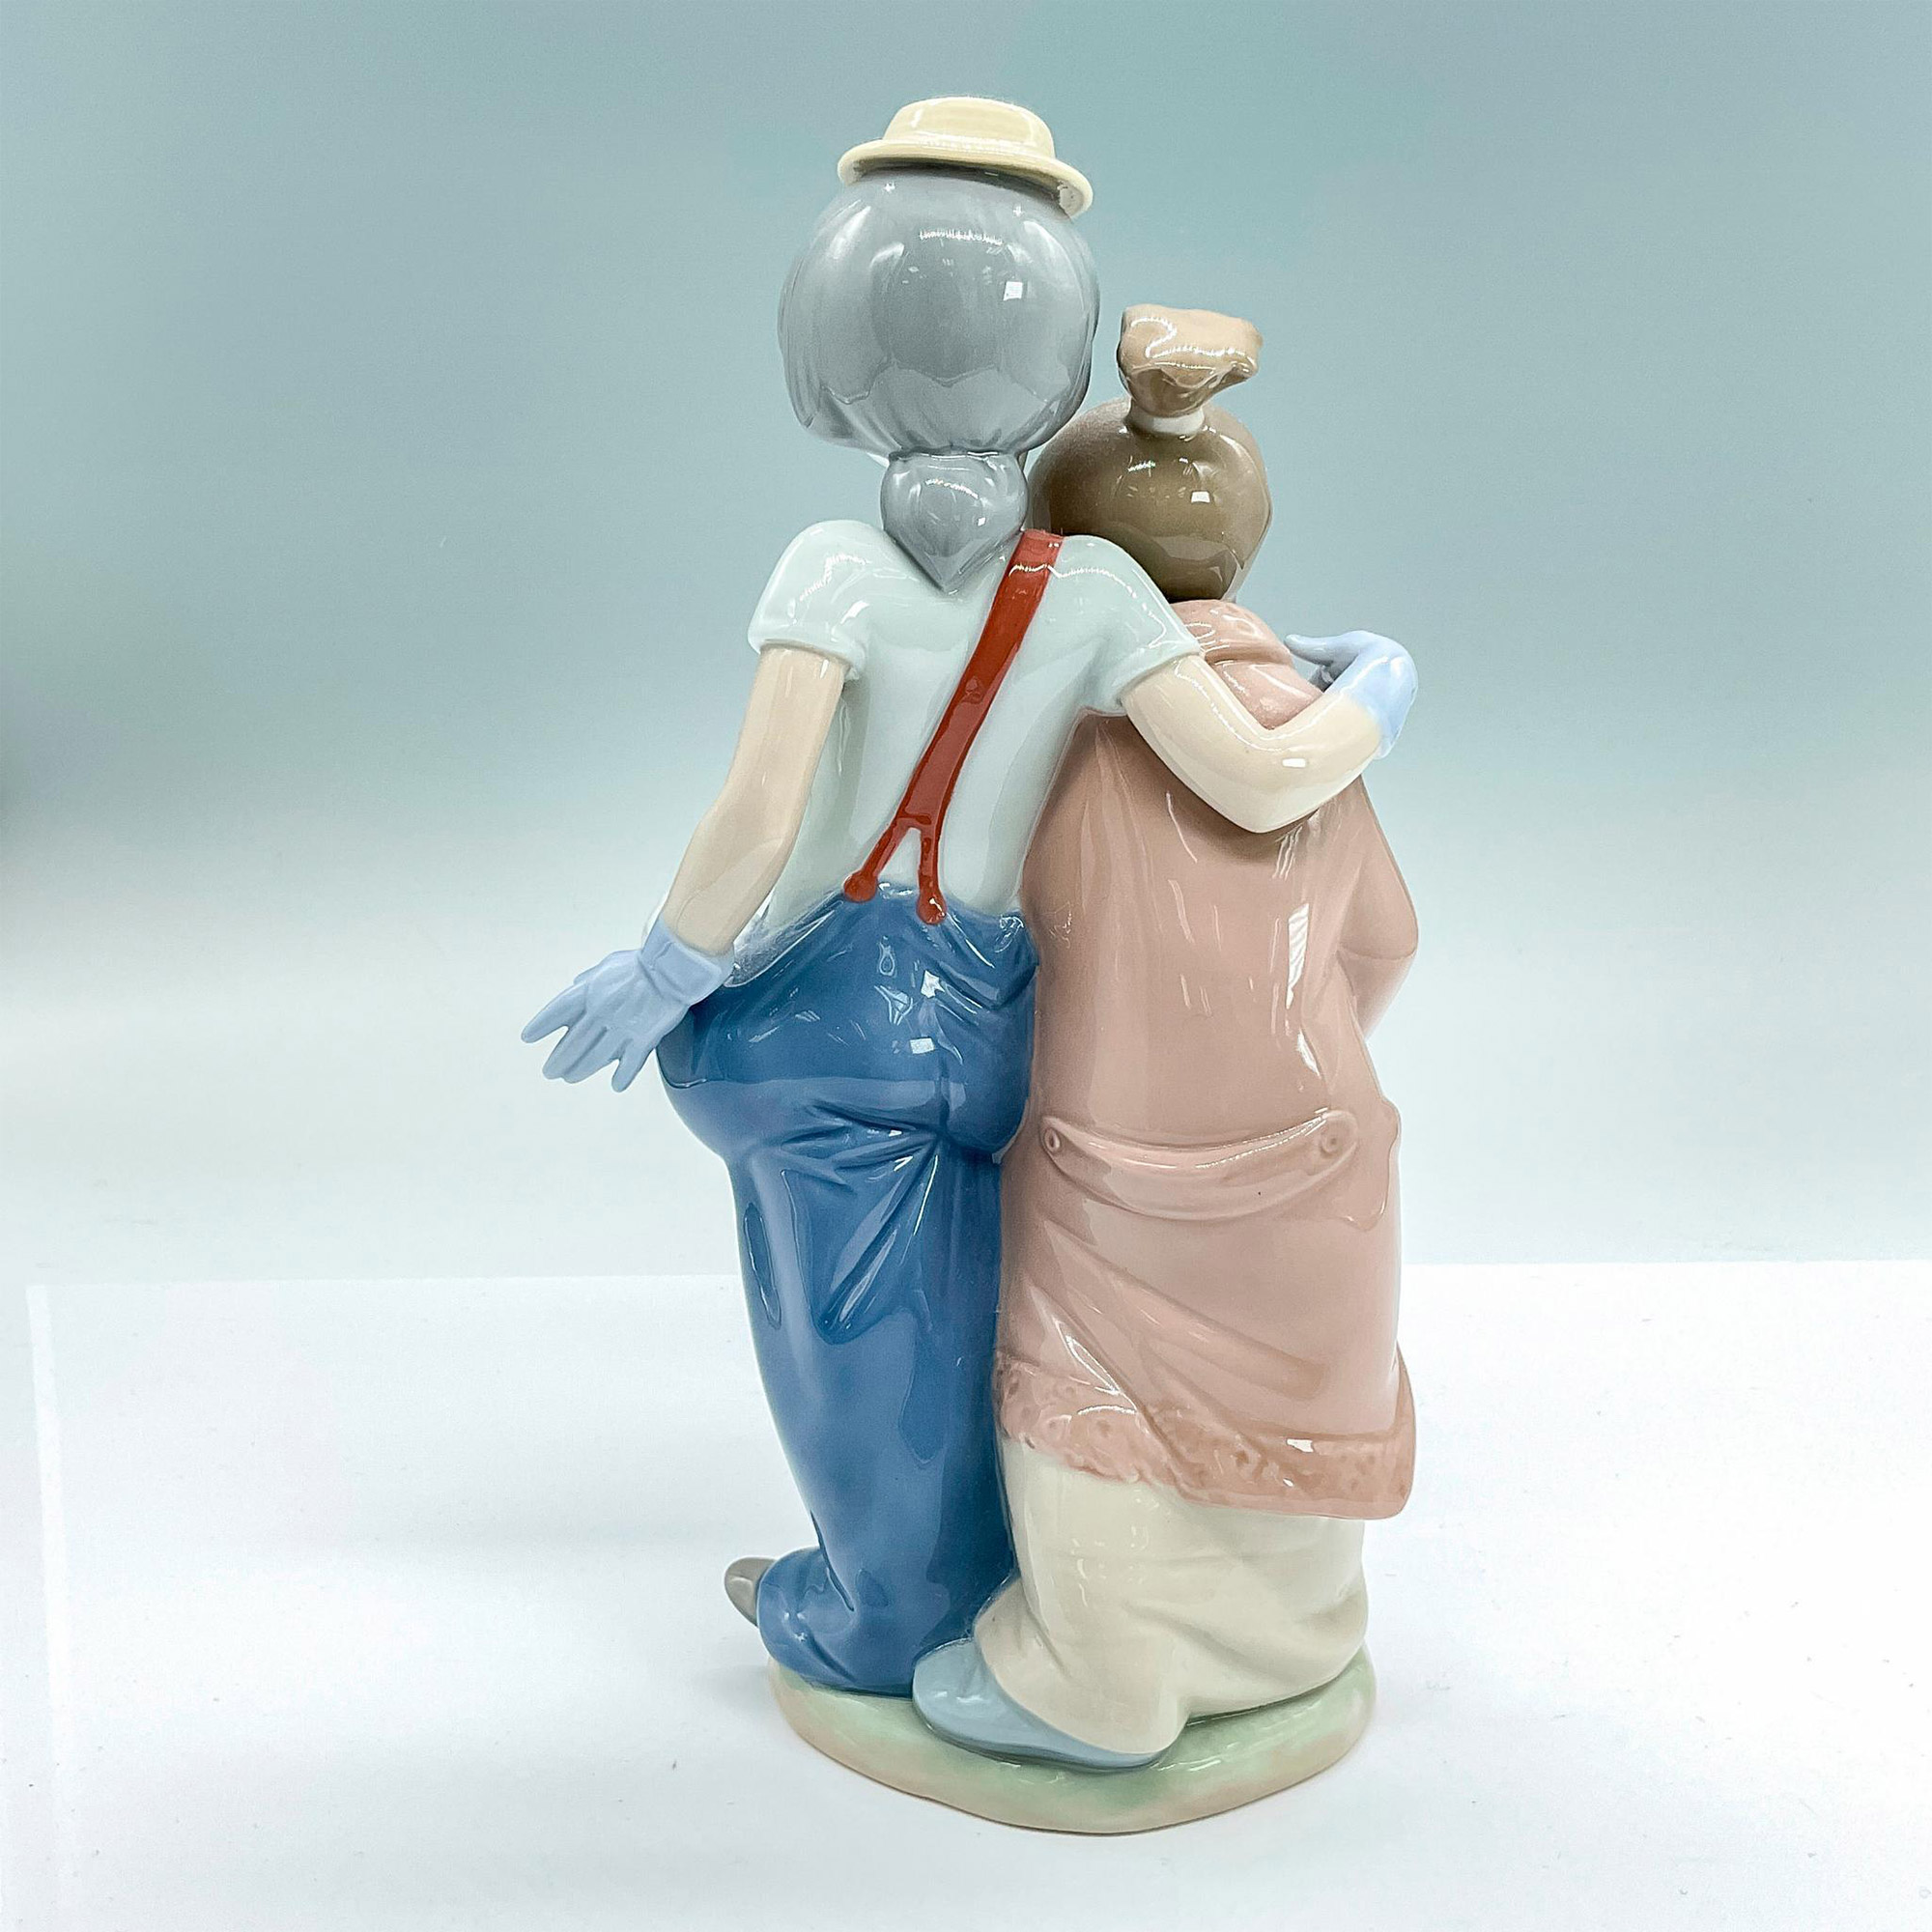 Pals Forever 1007686 - Lladro Porcelain Figurine - Image 2 of 3